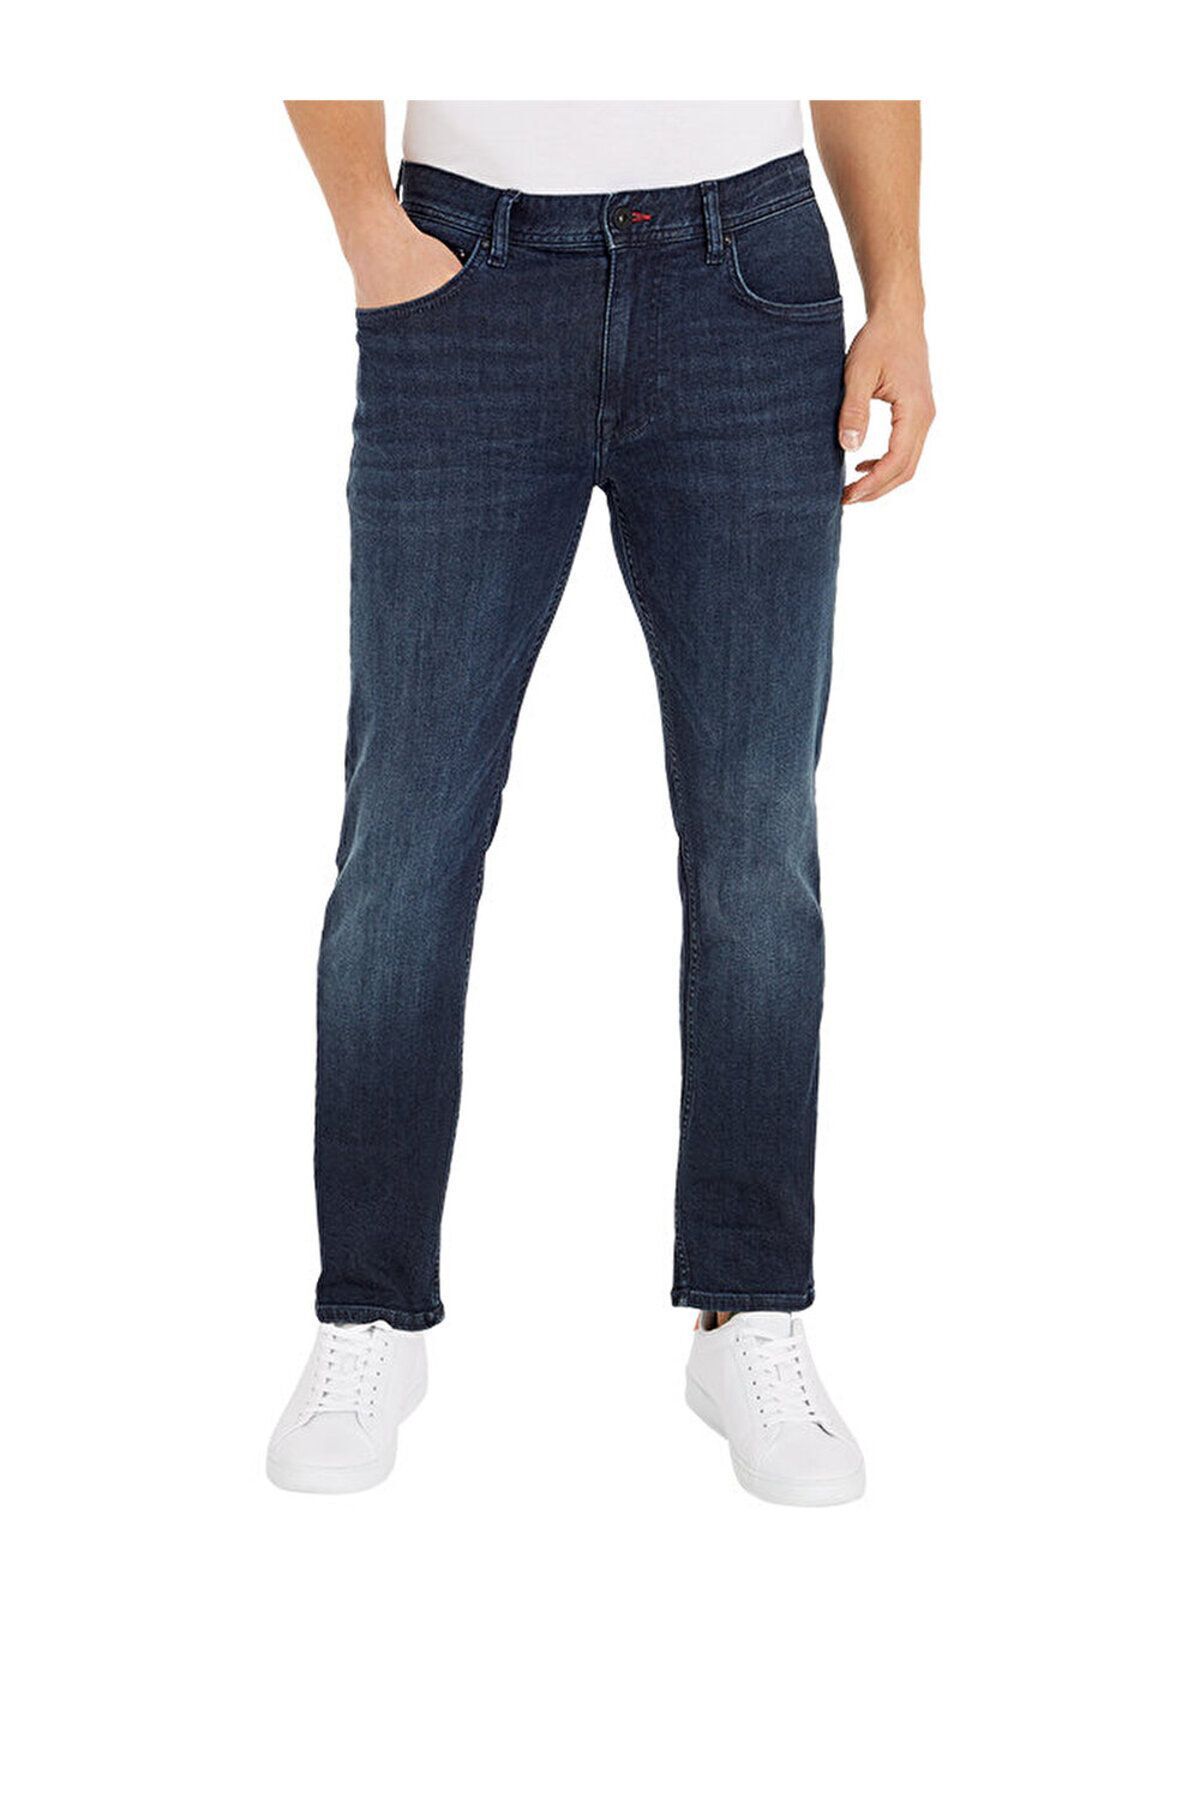 Tommy Hilfiger Erkek Denim Normal Belli Düz Model Günlük Kullanım Mavi Jeans MW0MW32099-1BQ